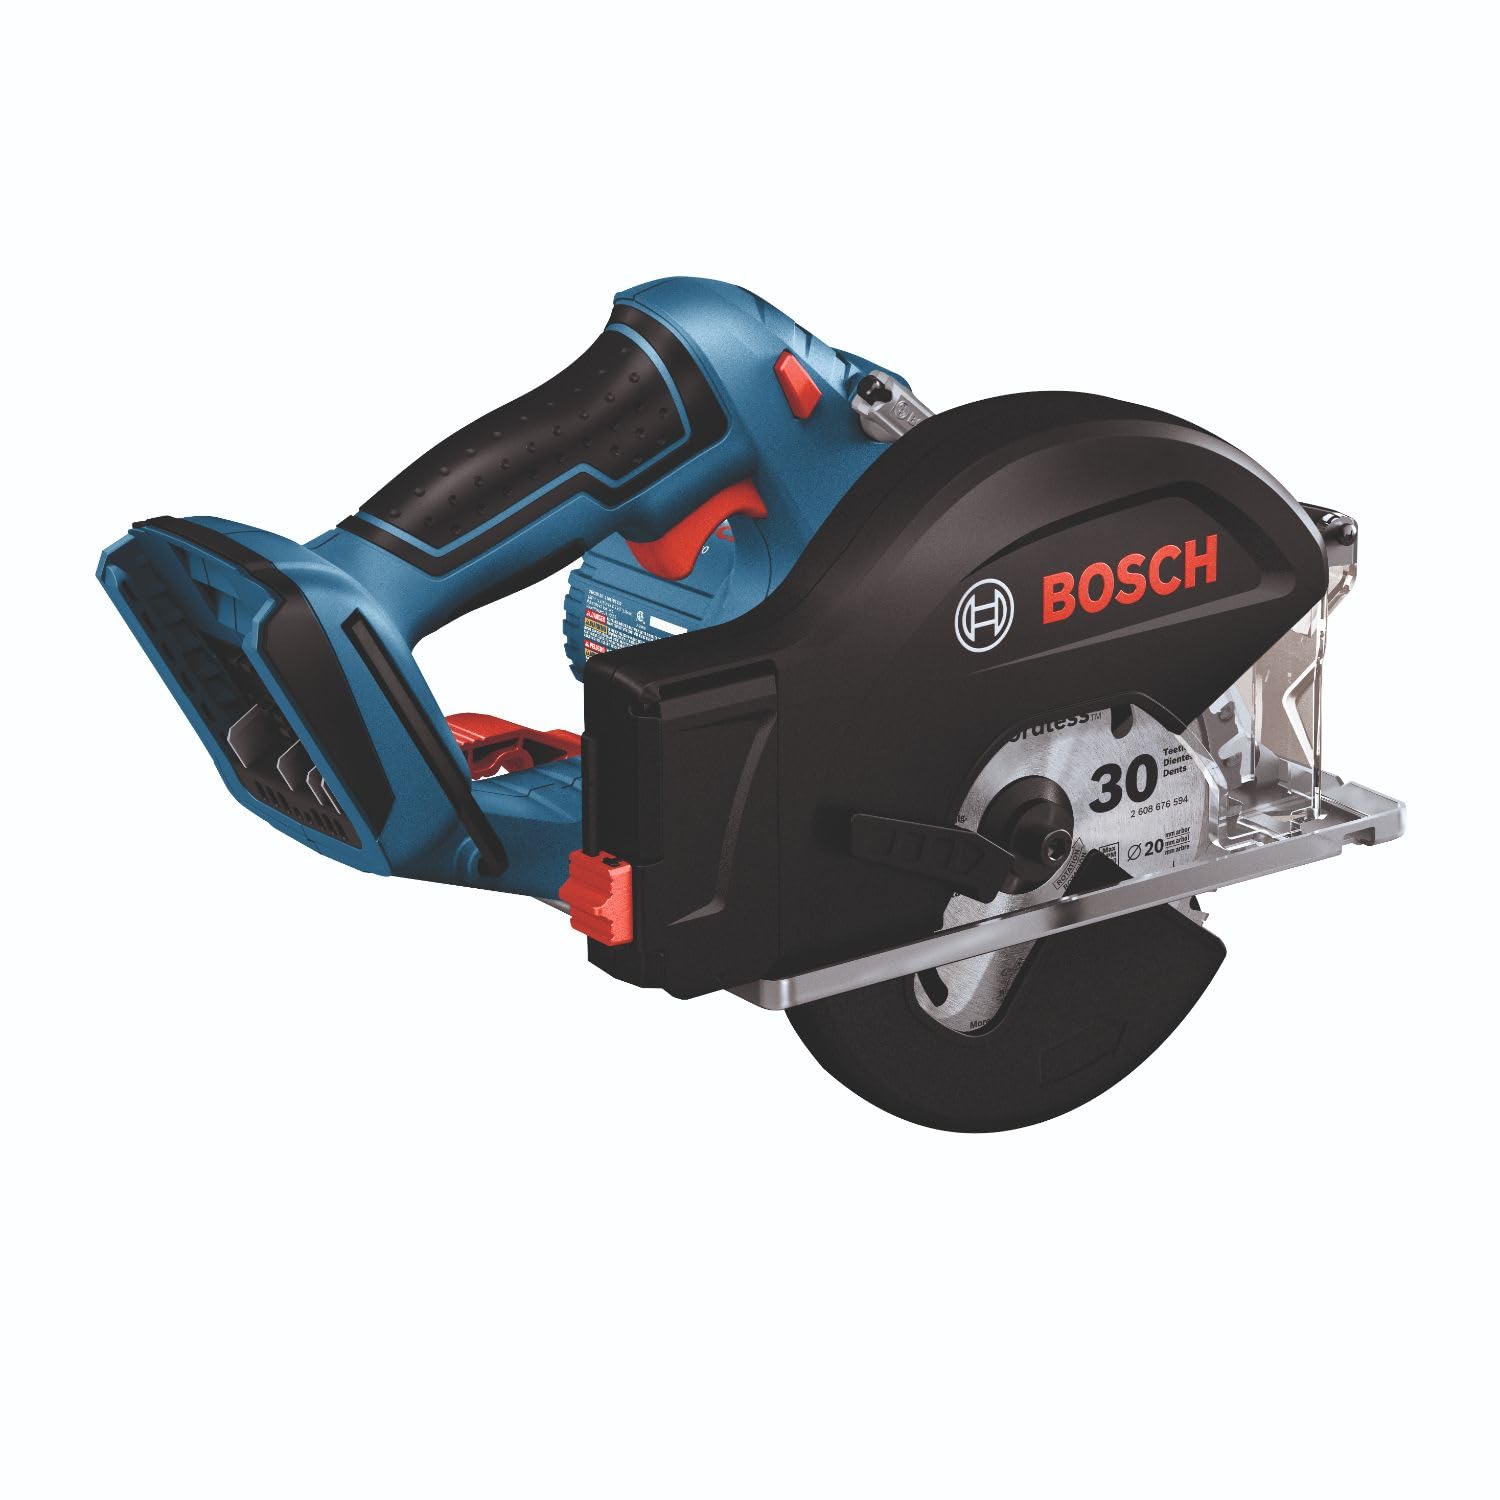 18V 5-3/8" Bosch Metal-Cutting Circular Saw (Bare Tool) $133 + Free Shipping